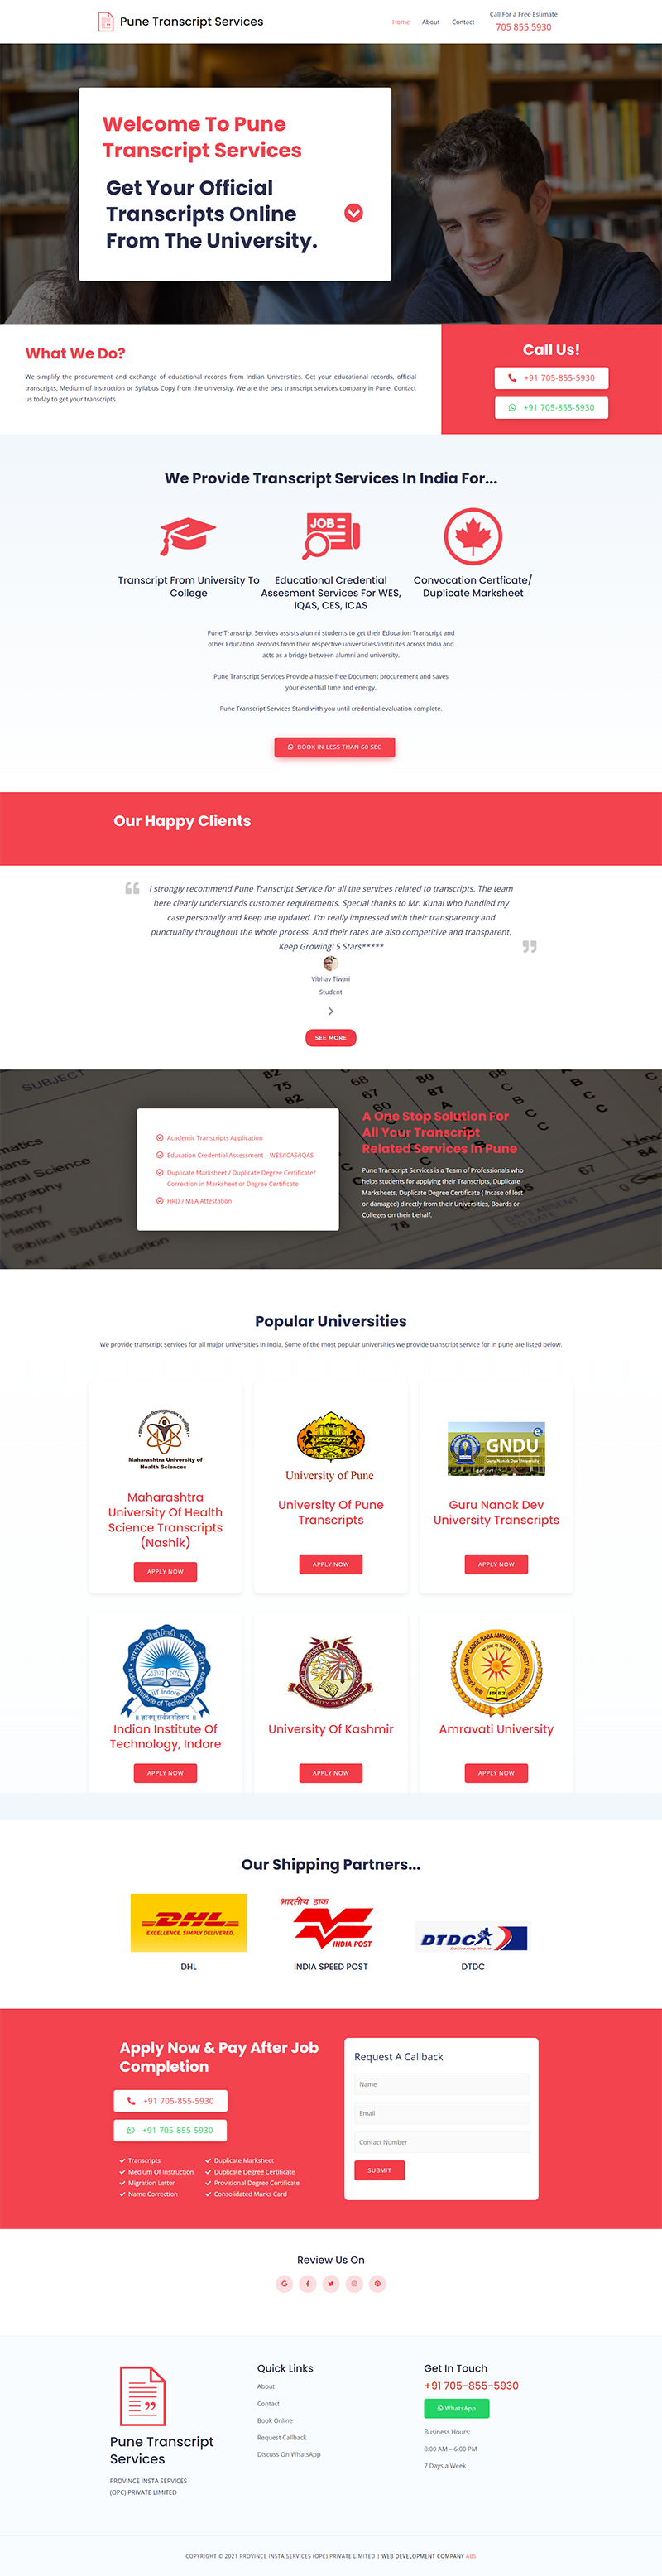 Pune Transcript Services website design by ABS Digital Agency Bangalore 1